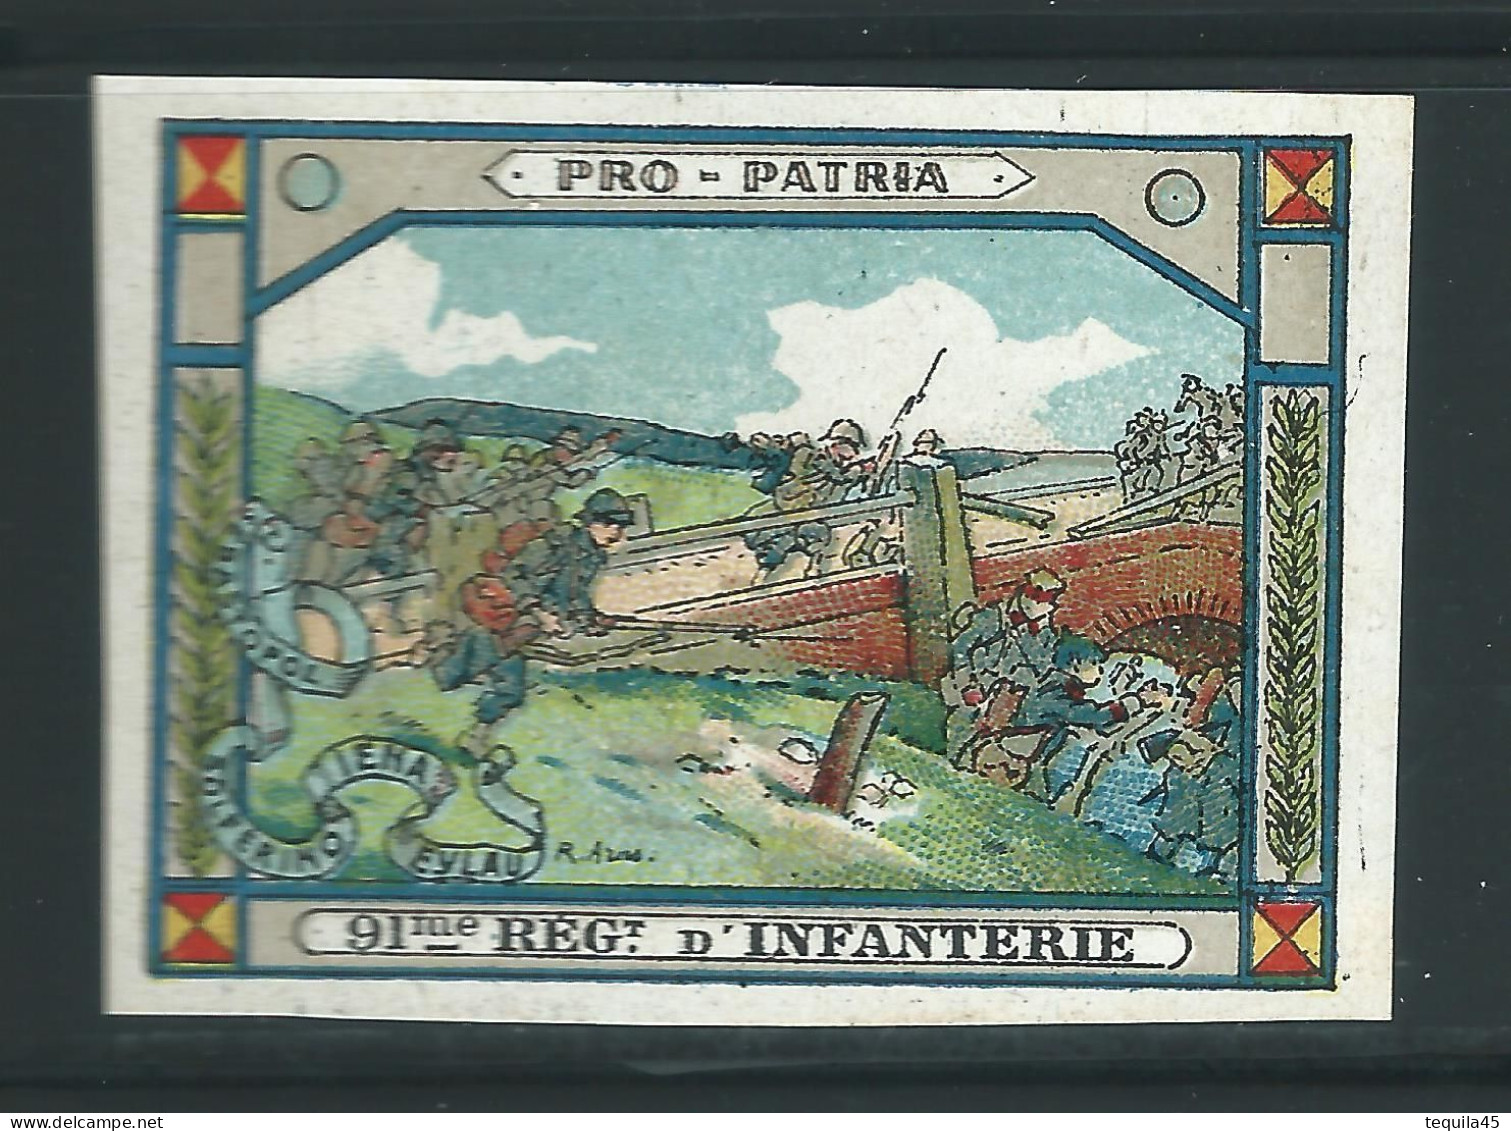 Rare : Vignette DELANDRE - France 91 éme Régt D'infanterie De Ligne - 1914 -18 WWI WW1 Poster Stamp - Erinnophilie